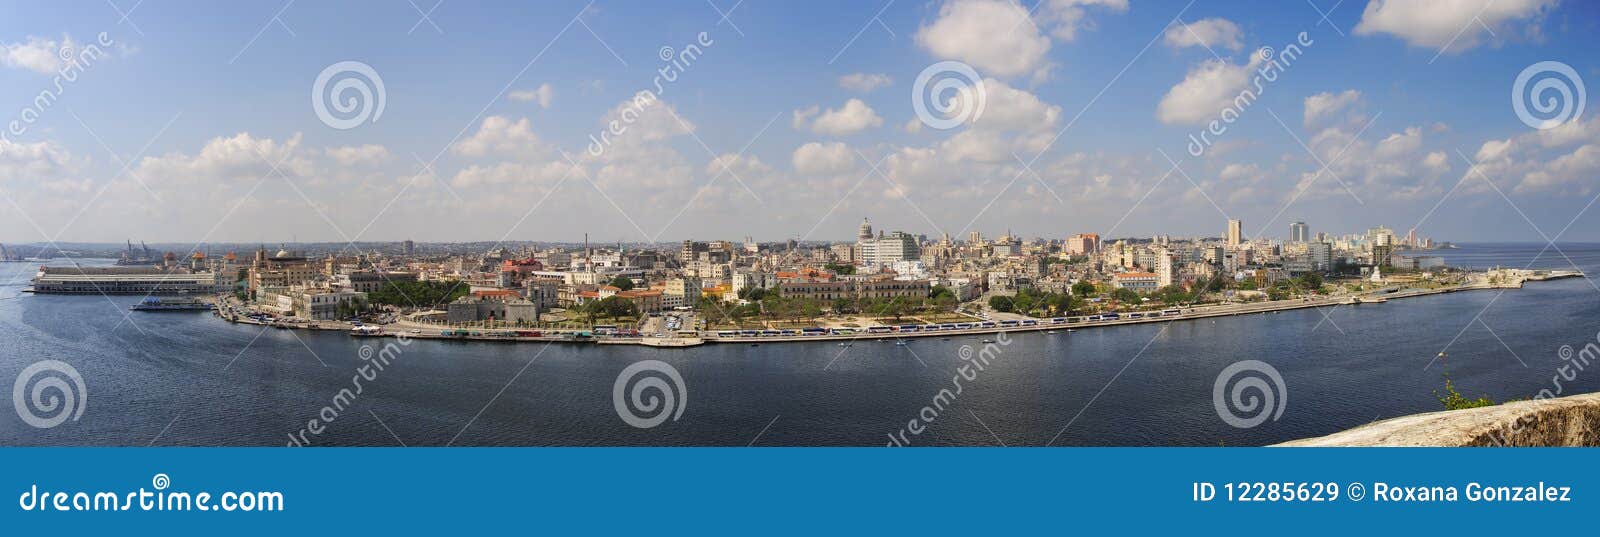 Images libres de droits: Vue panoramique de bord de mer de la Havane